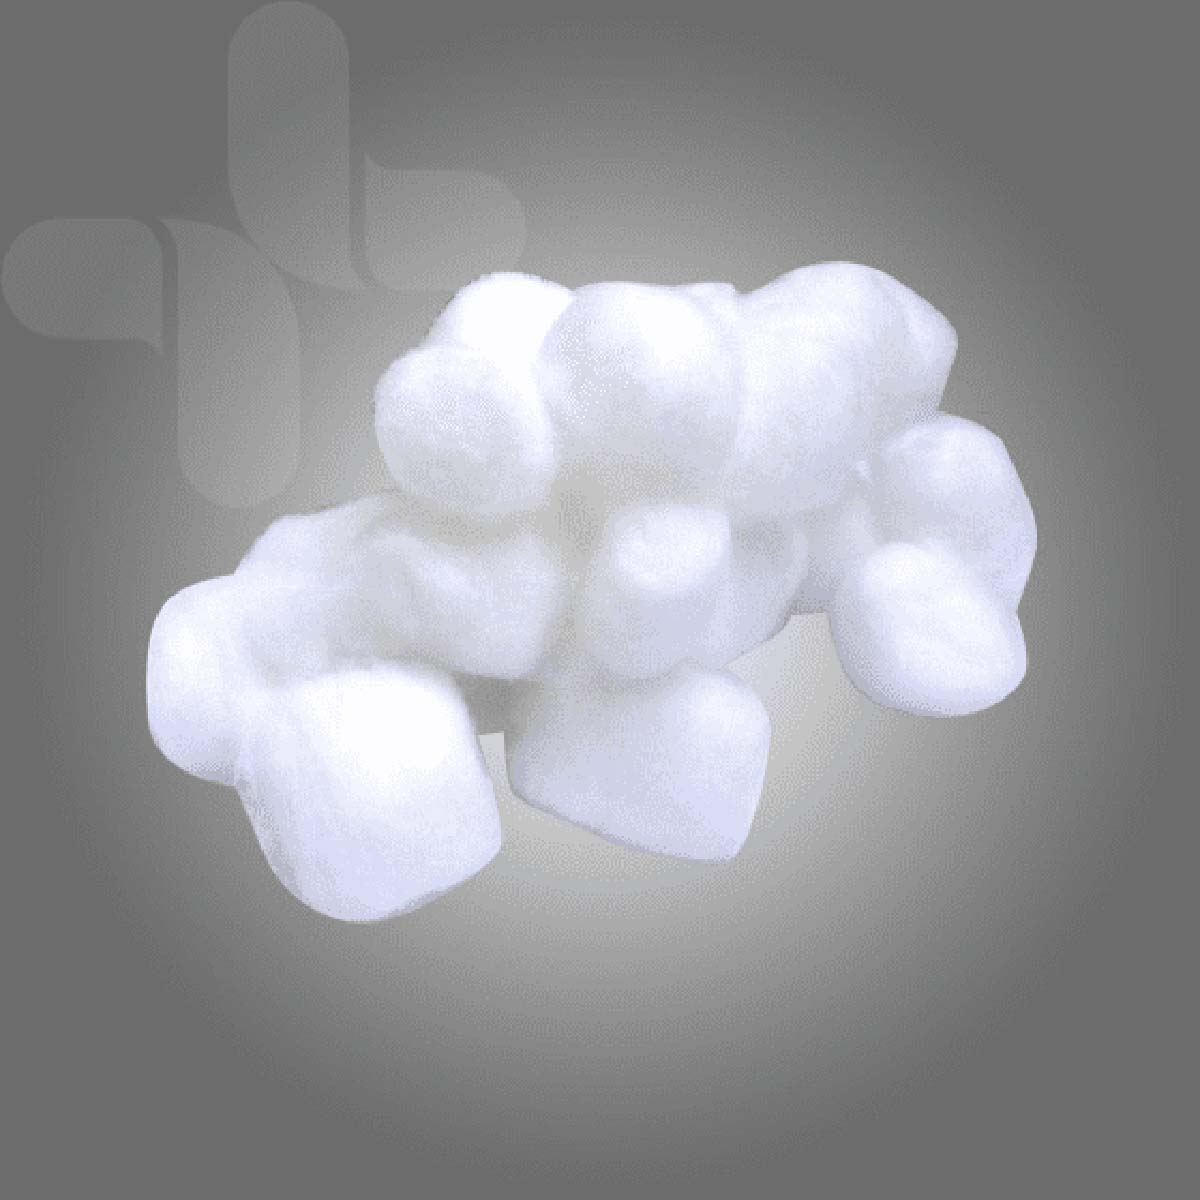 AEROSWAB Small Cotton Balls 100pk